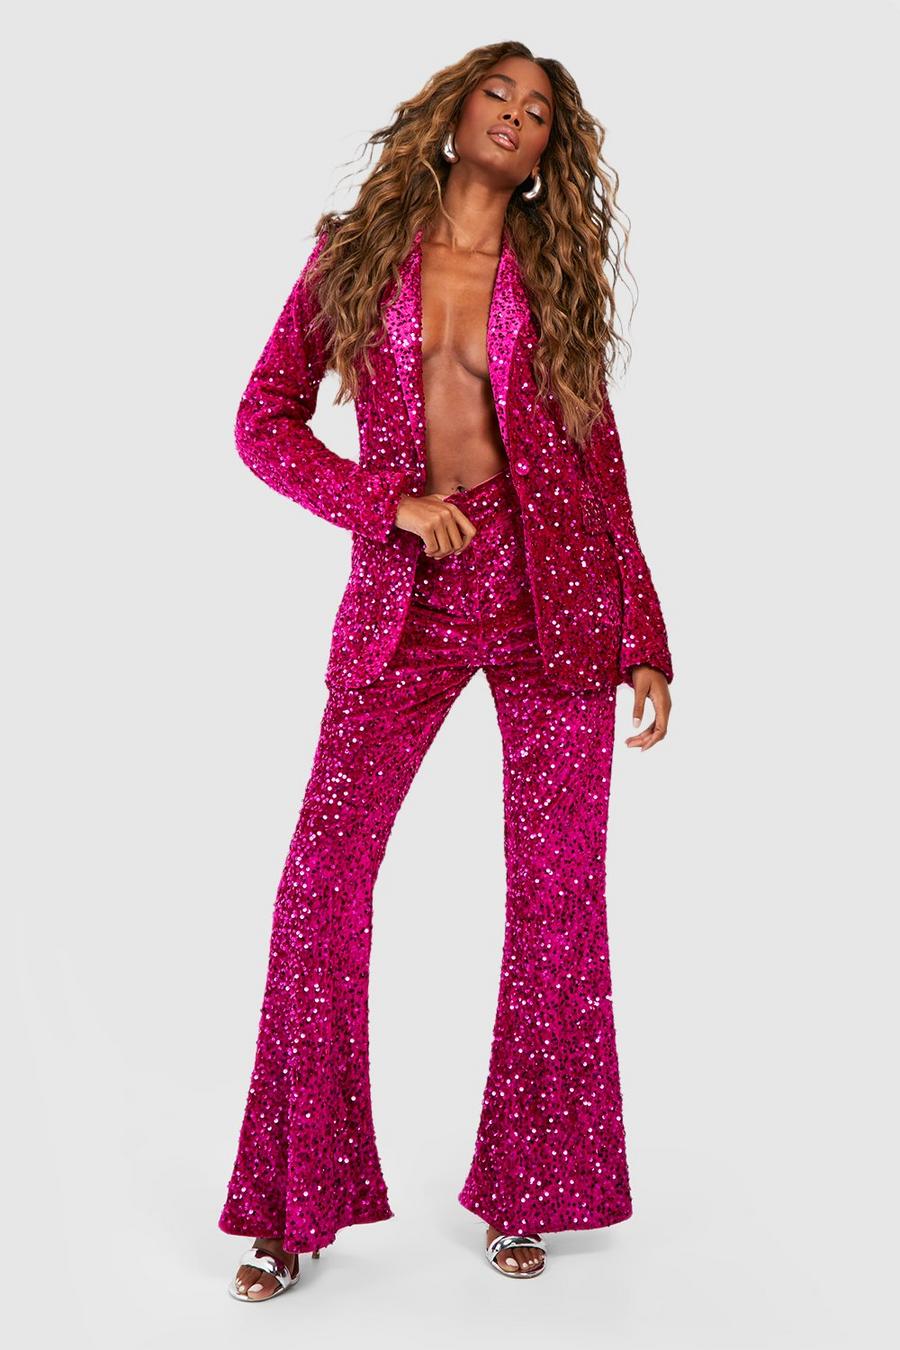 Hot pink Velvet Sequin Fit & Flare Dress Pants